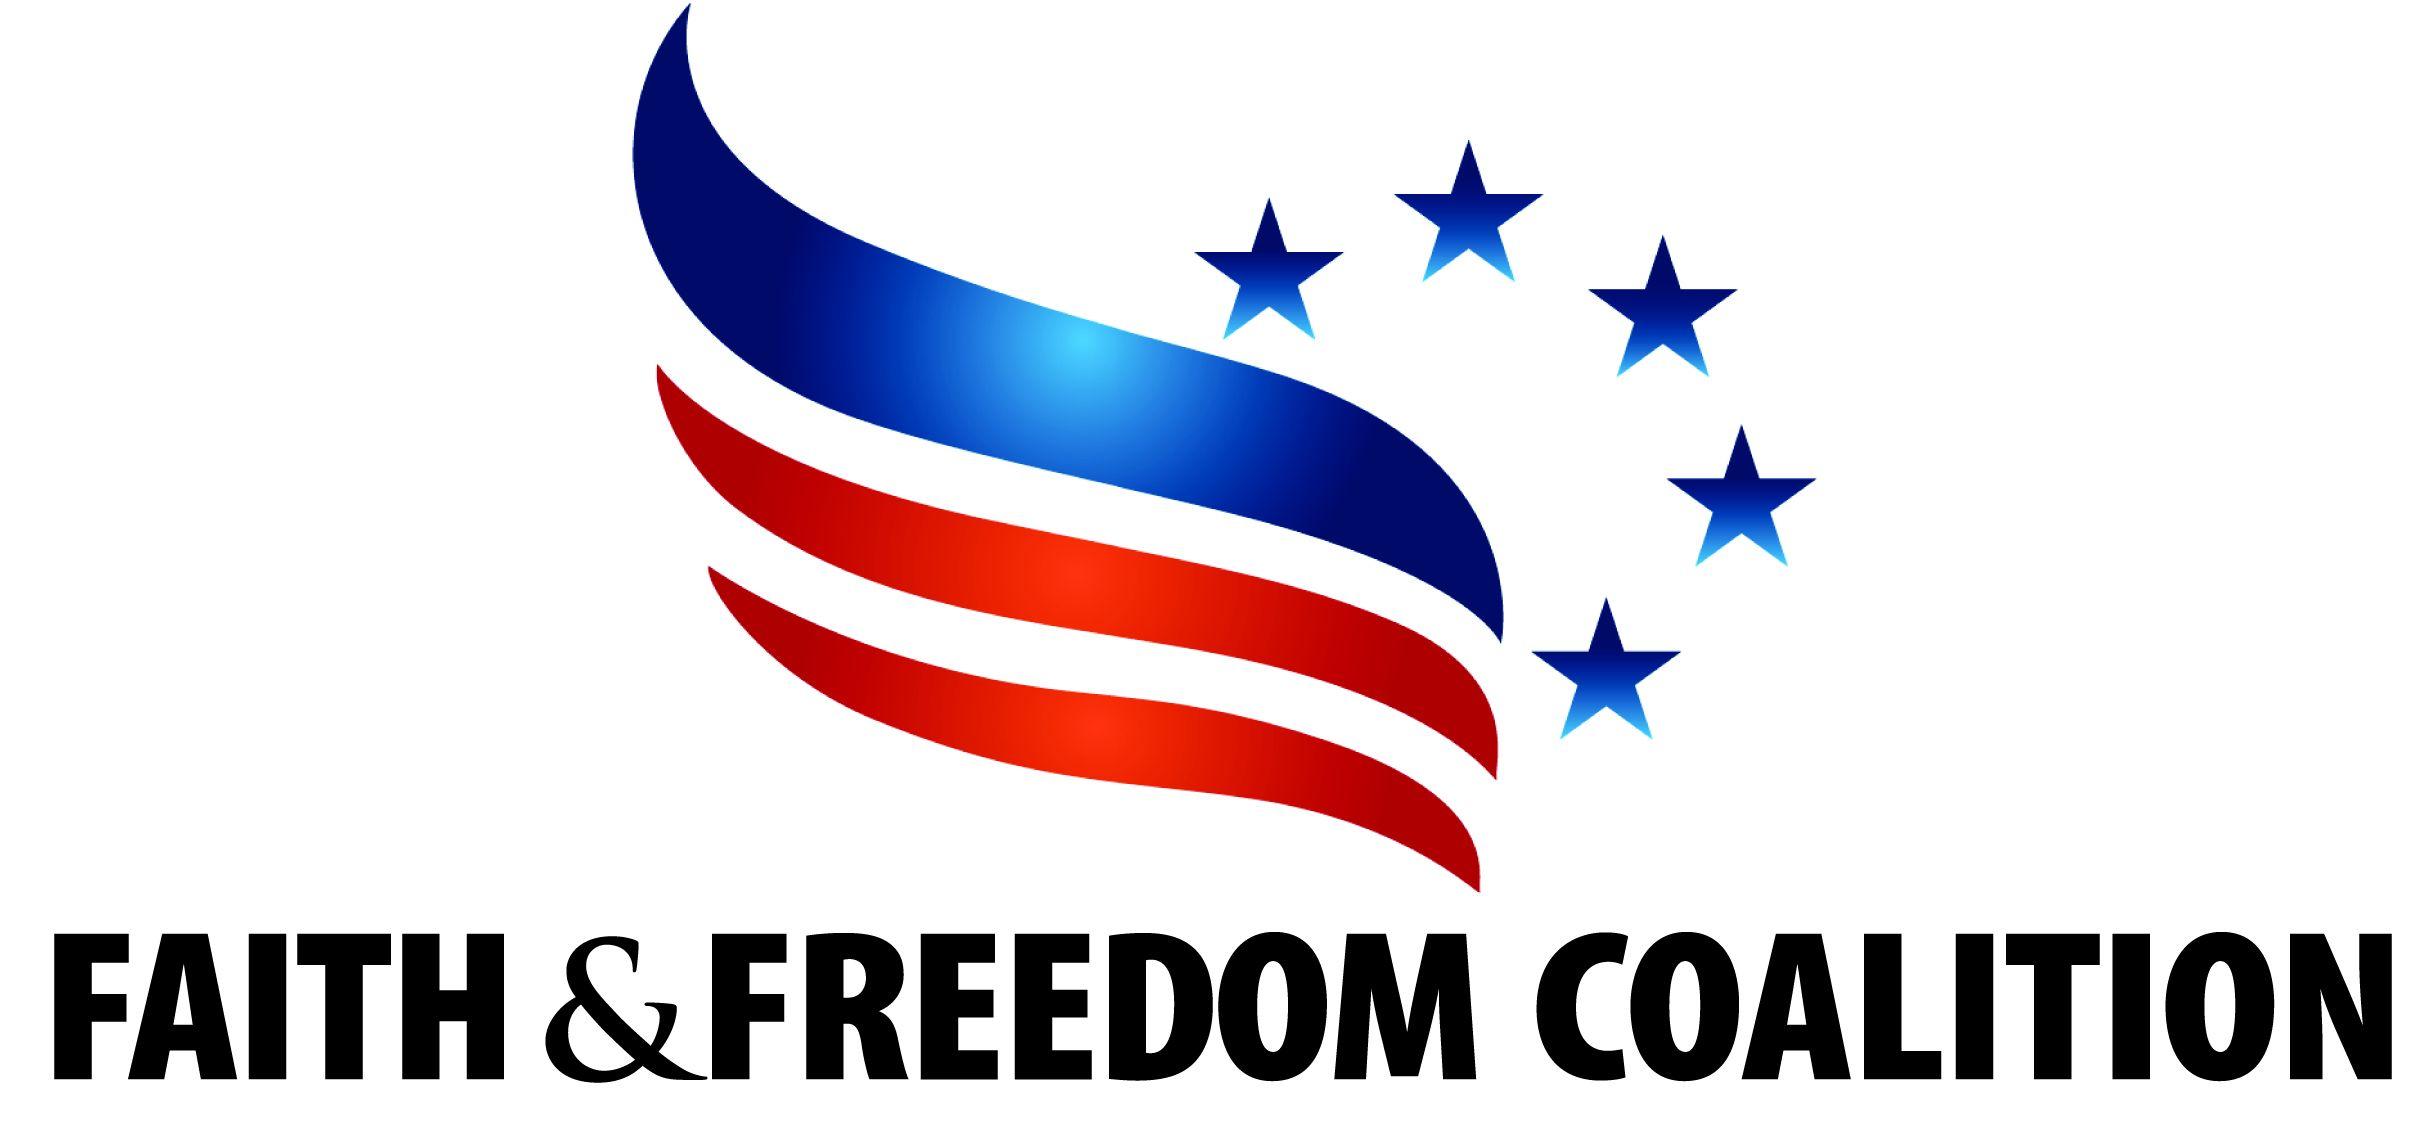 Coalition Logo - Faith and Freedom Coalition